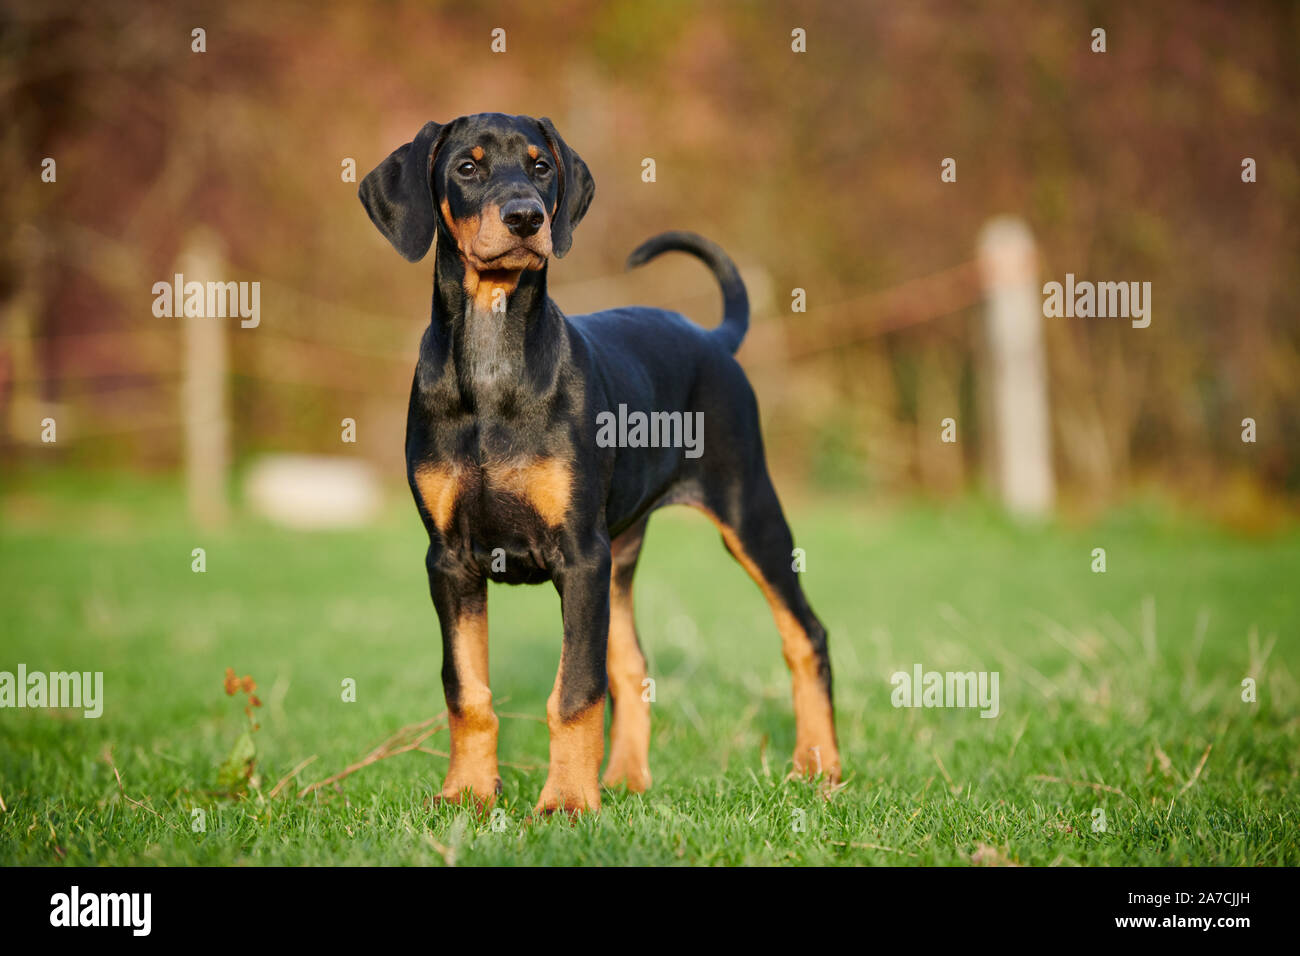 standing Doberman puppy Stock Photo